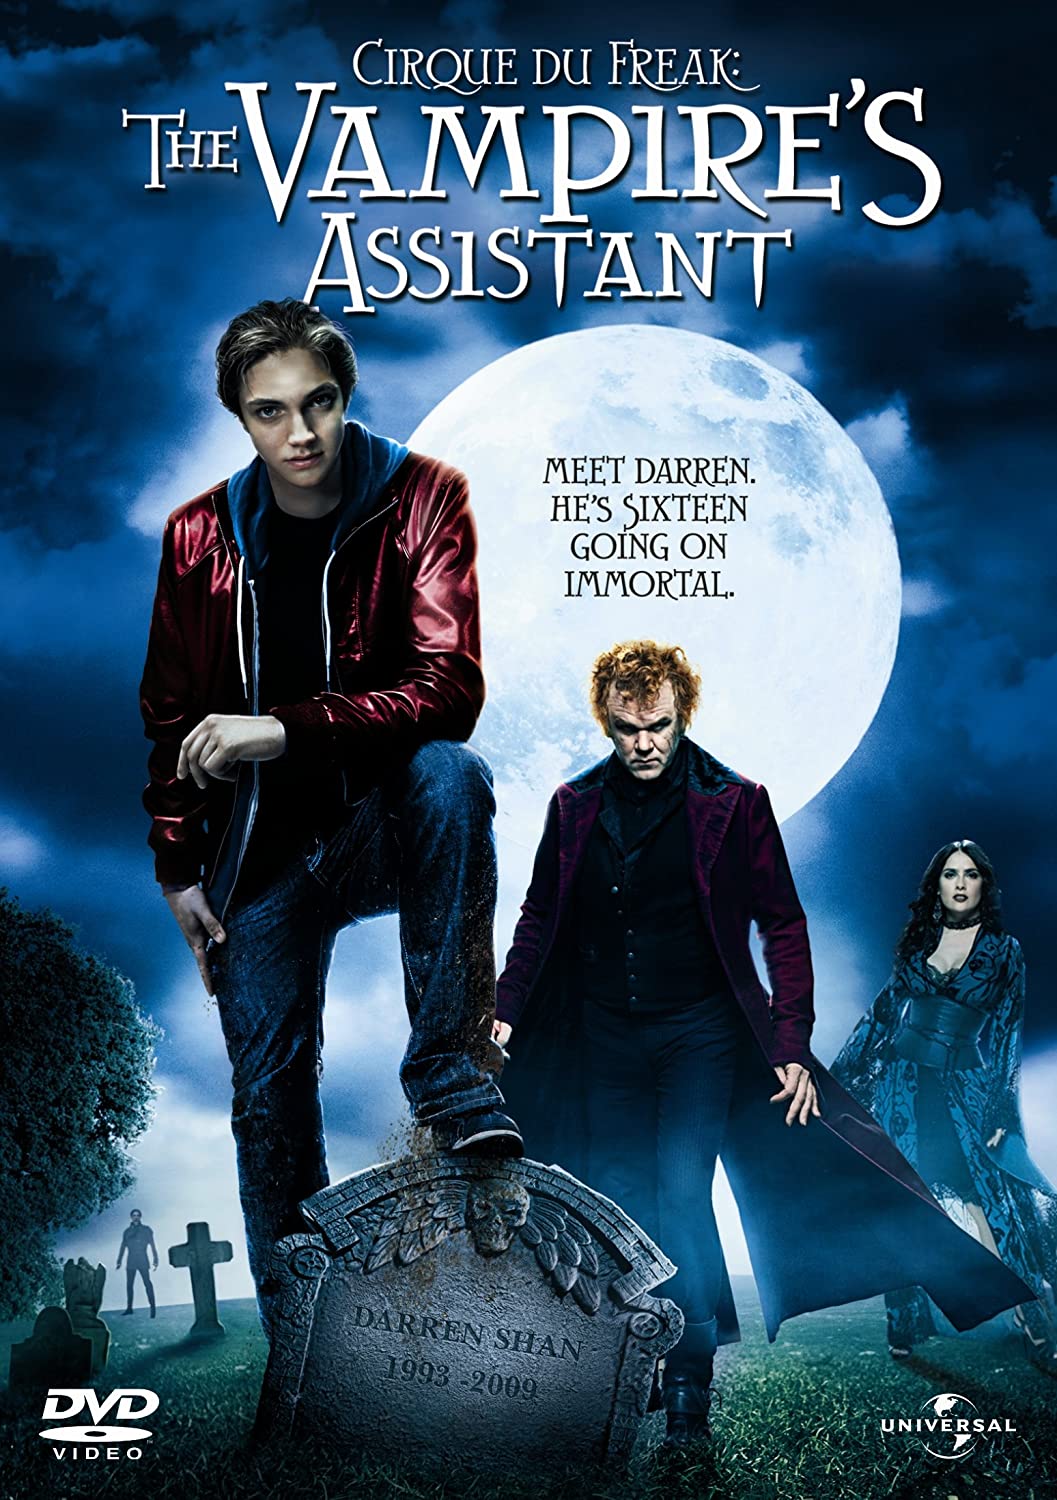 Cirque Du Freak: The Vampire's Assistant [DVD]